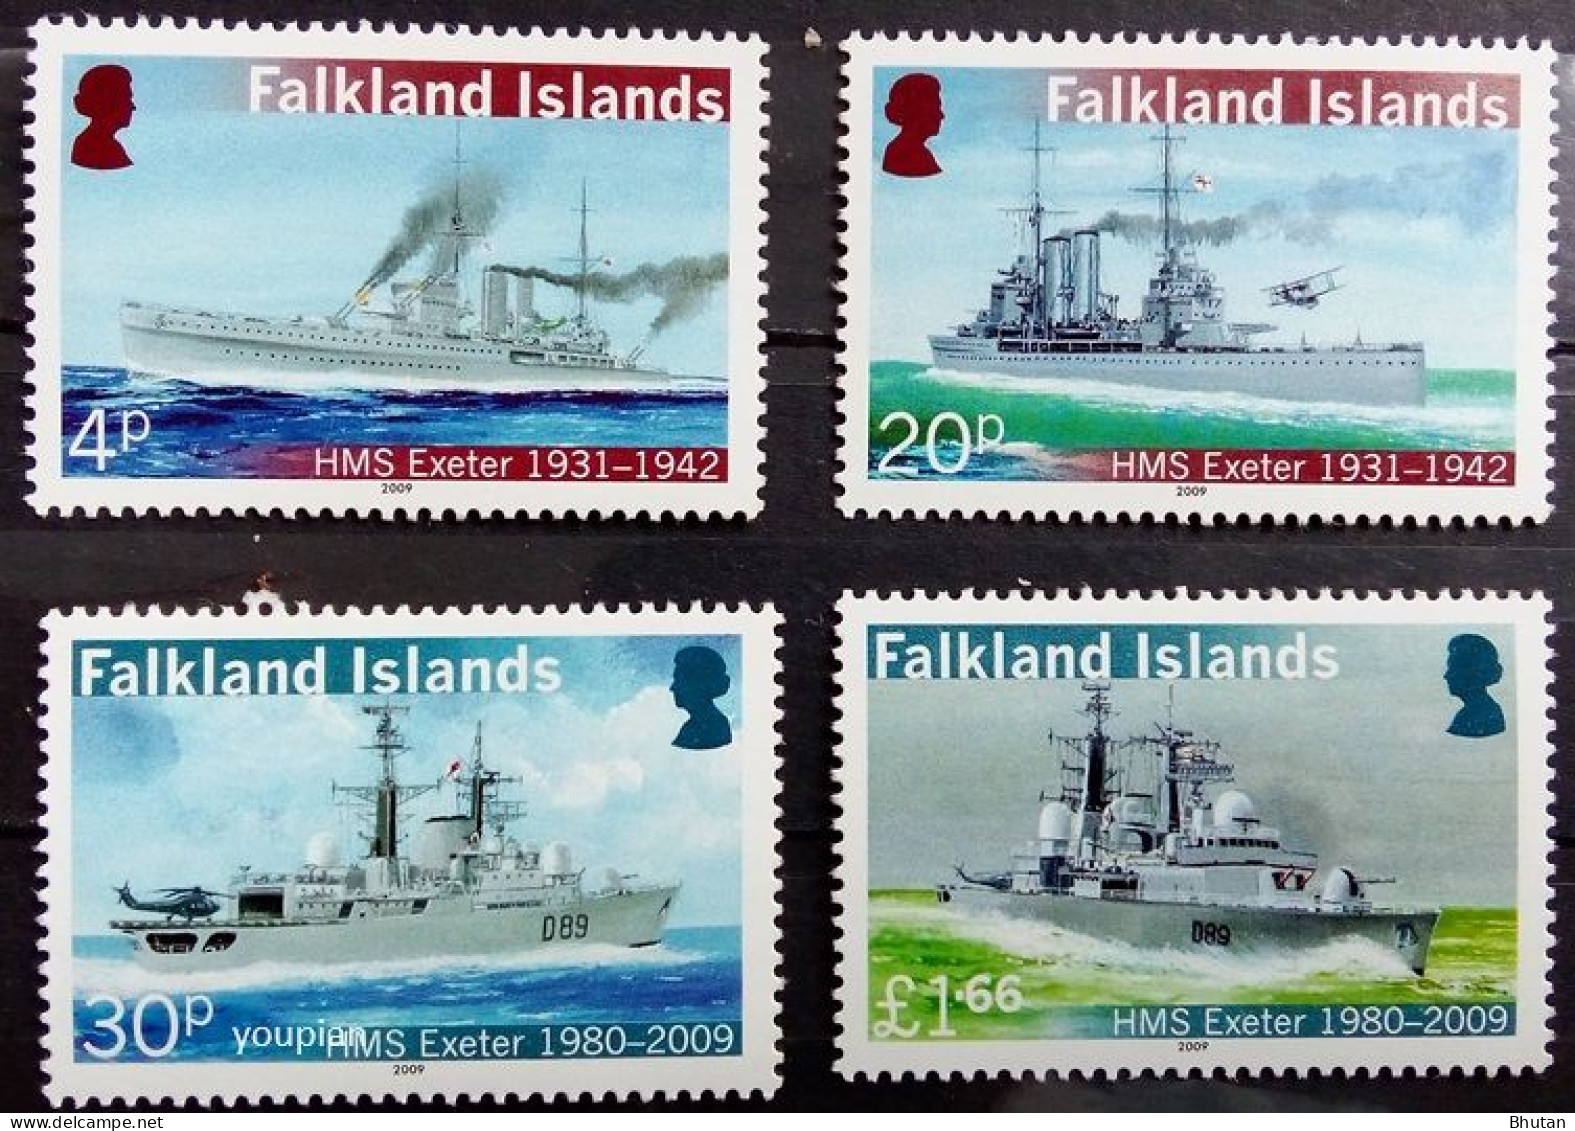 Falkland Islands 2009, Ships - HMS Exeter, MNH Stamps Set - Falkland